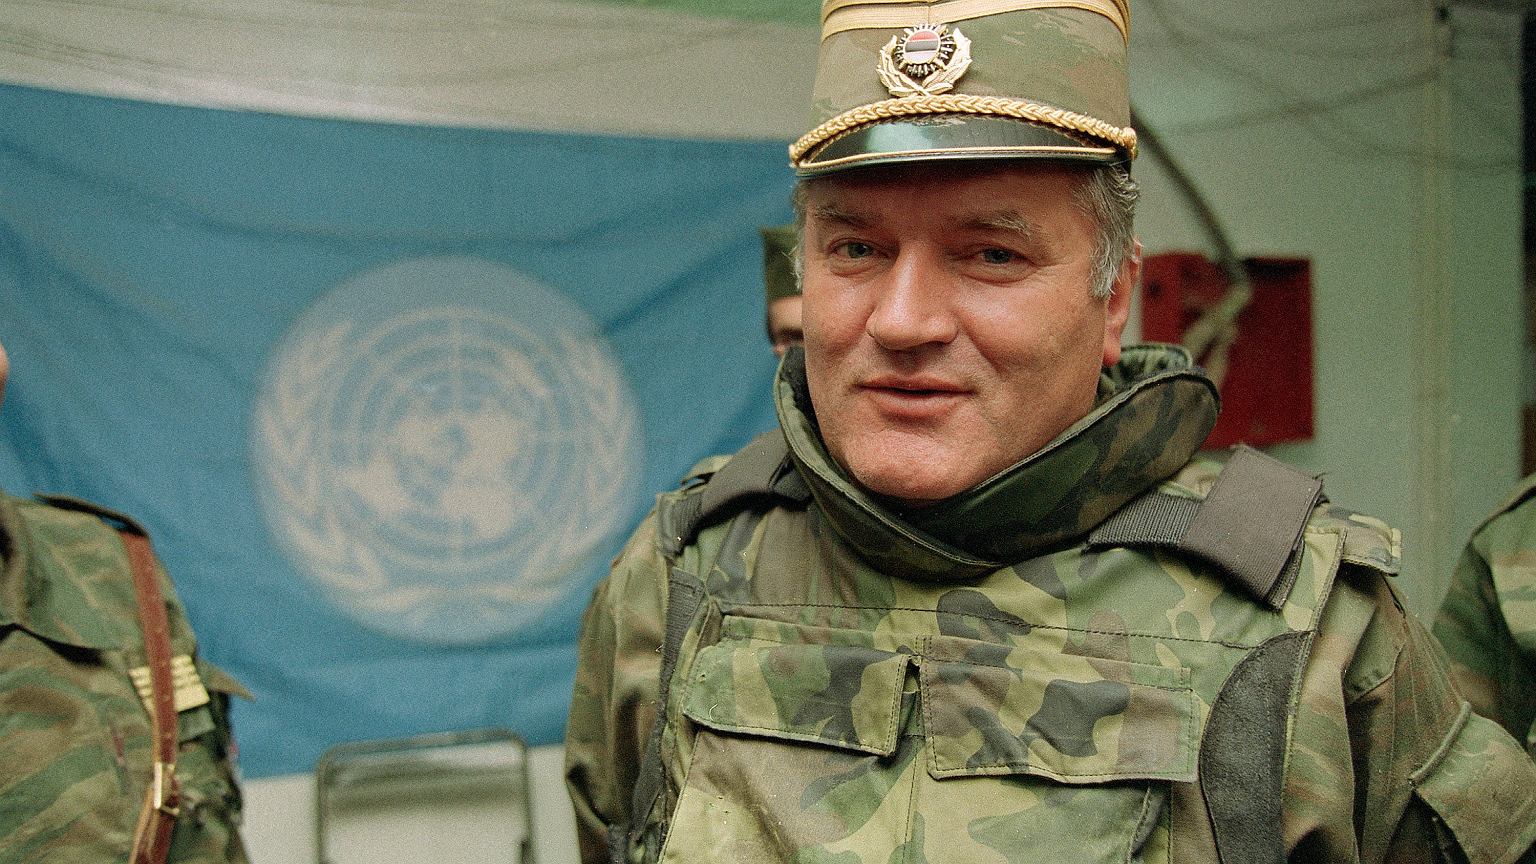 Ratko Mladic